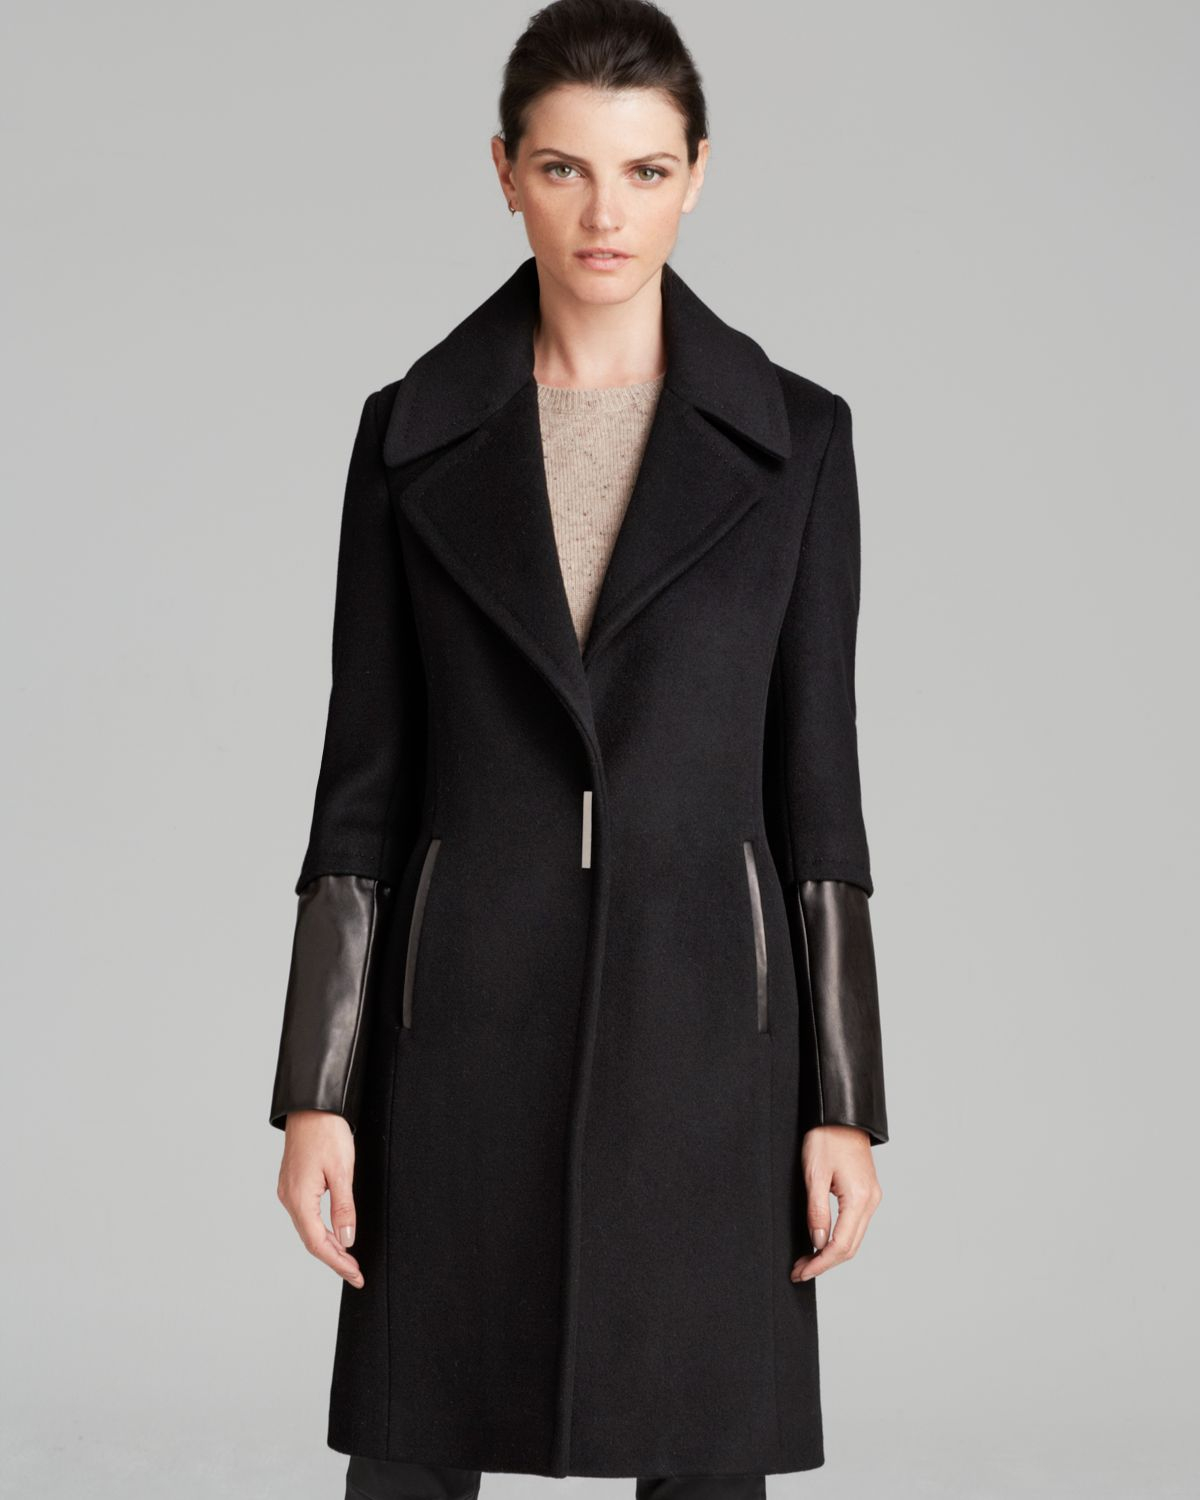 Elie Tahari Coat - Dawnson Leather Sleeve in Black - Lyst